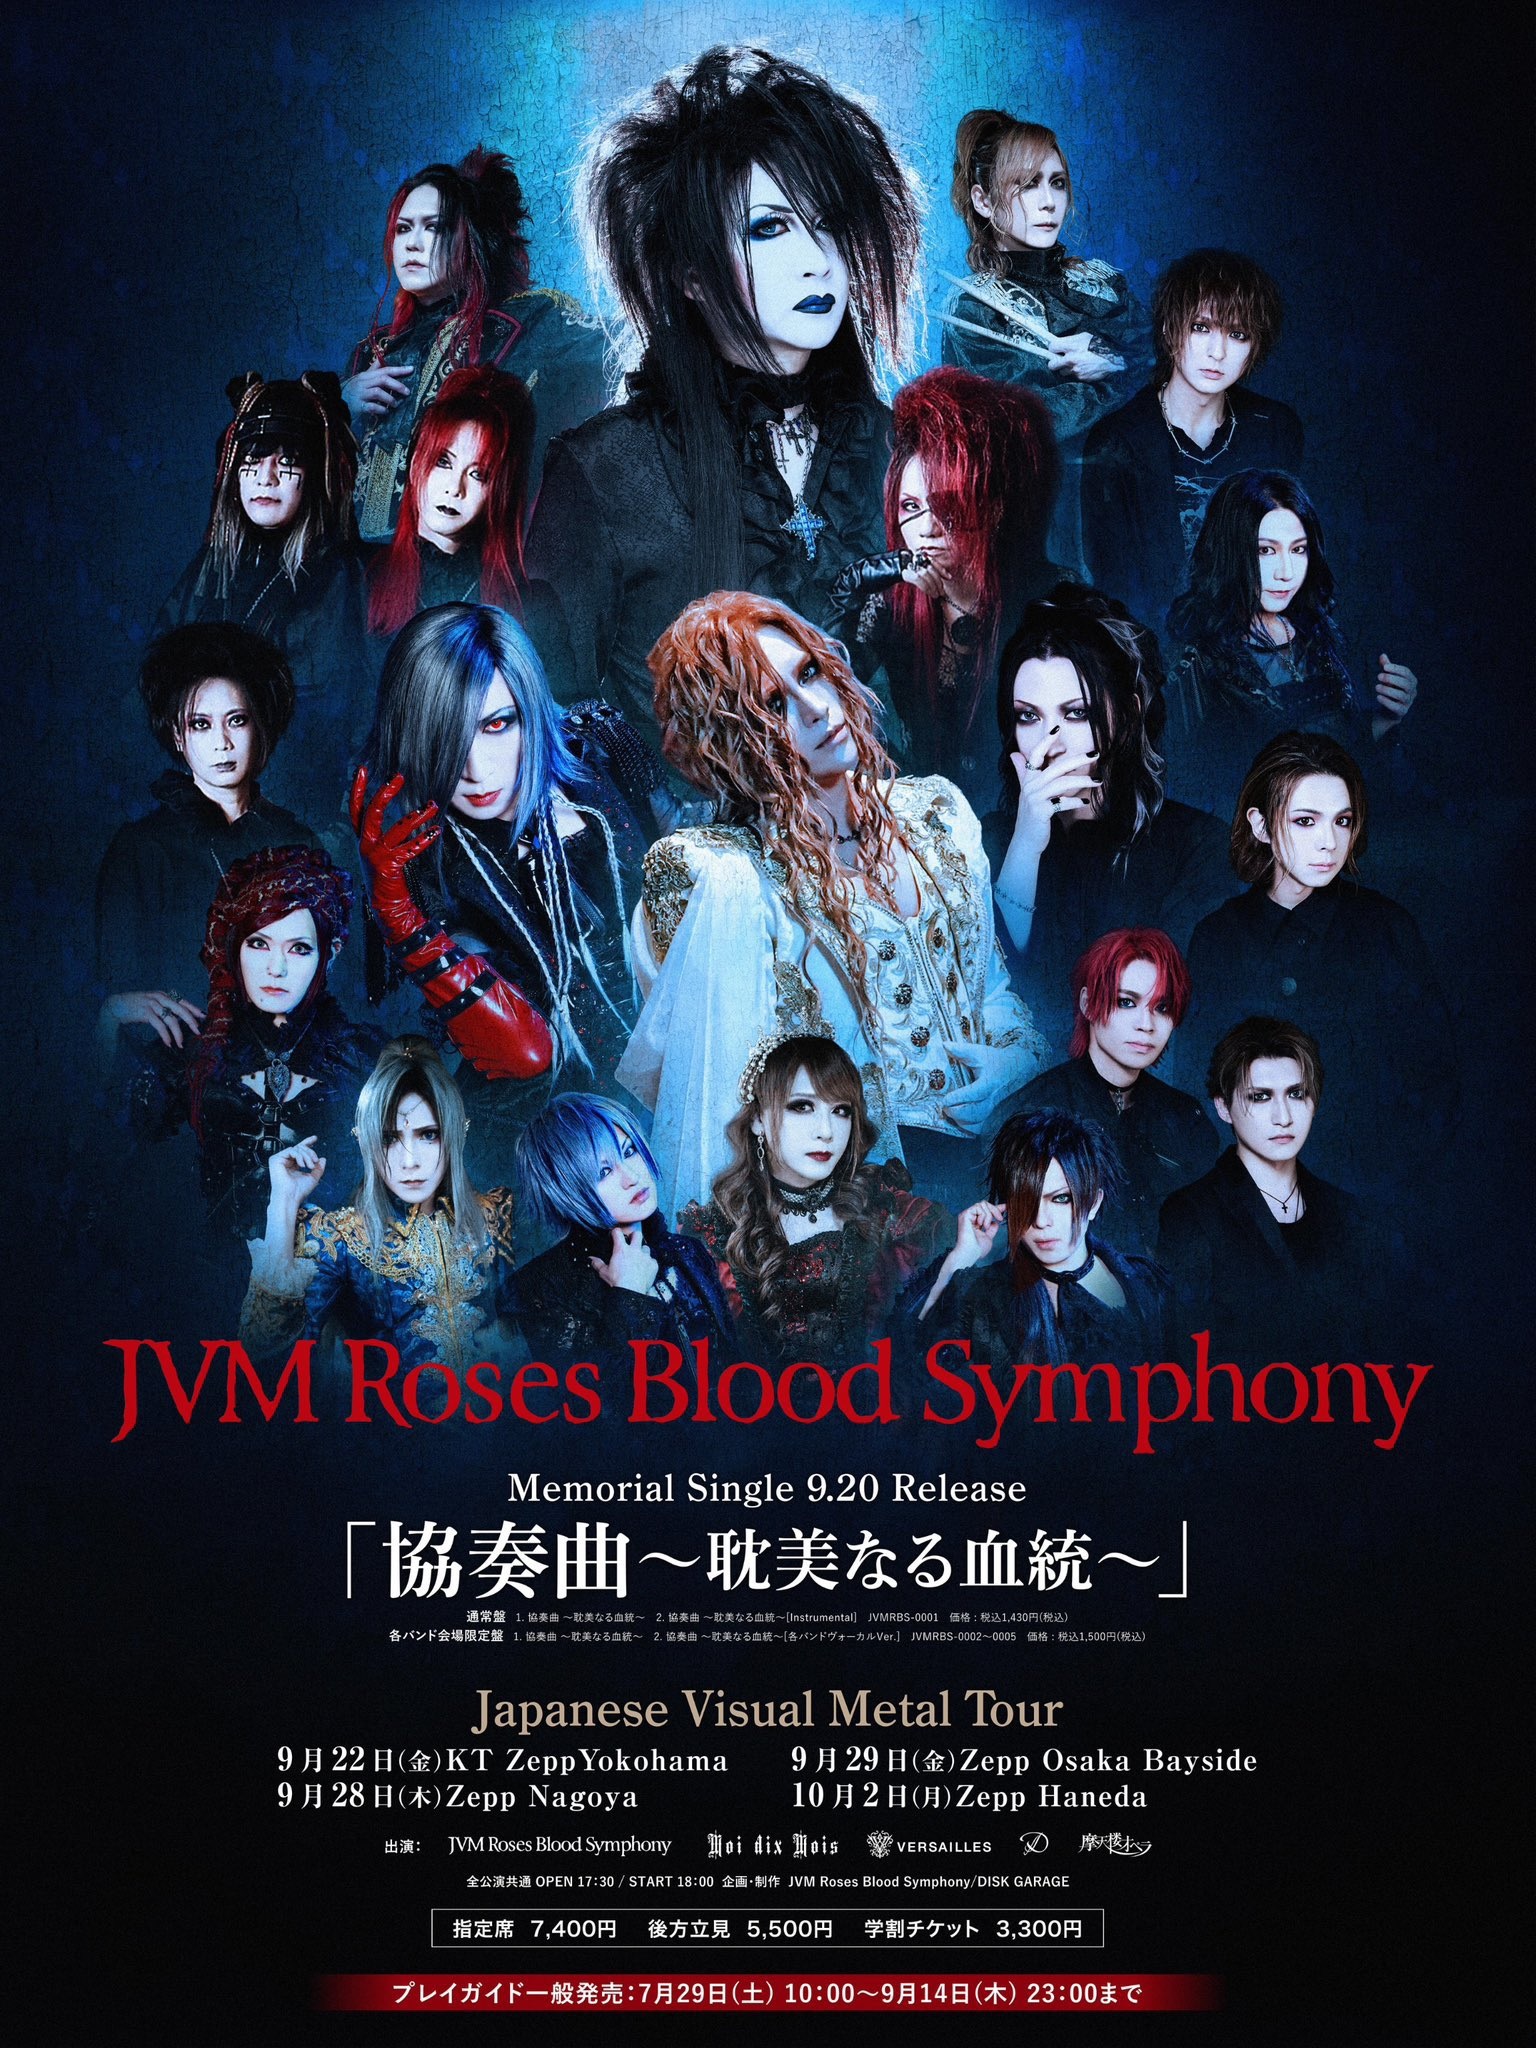 Tour poster